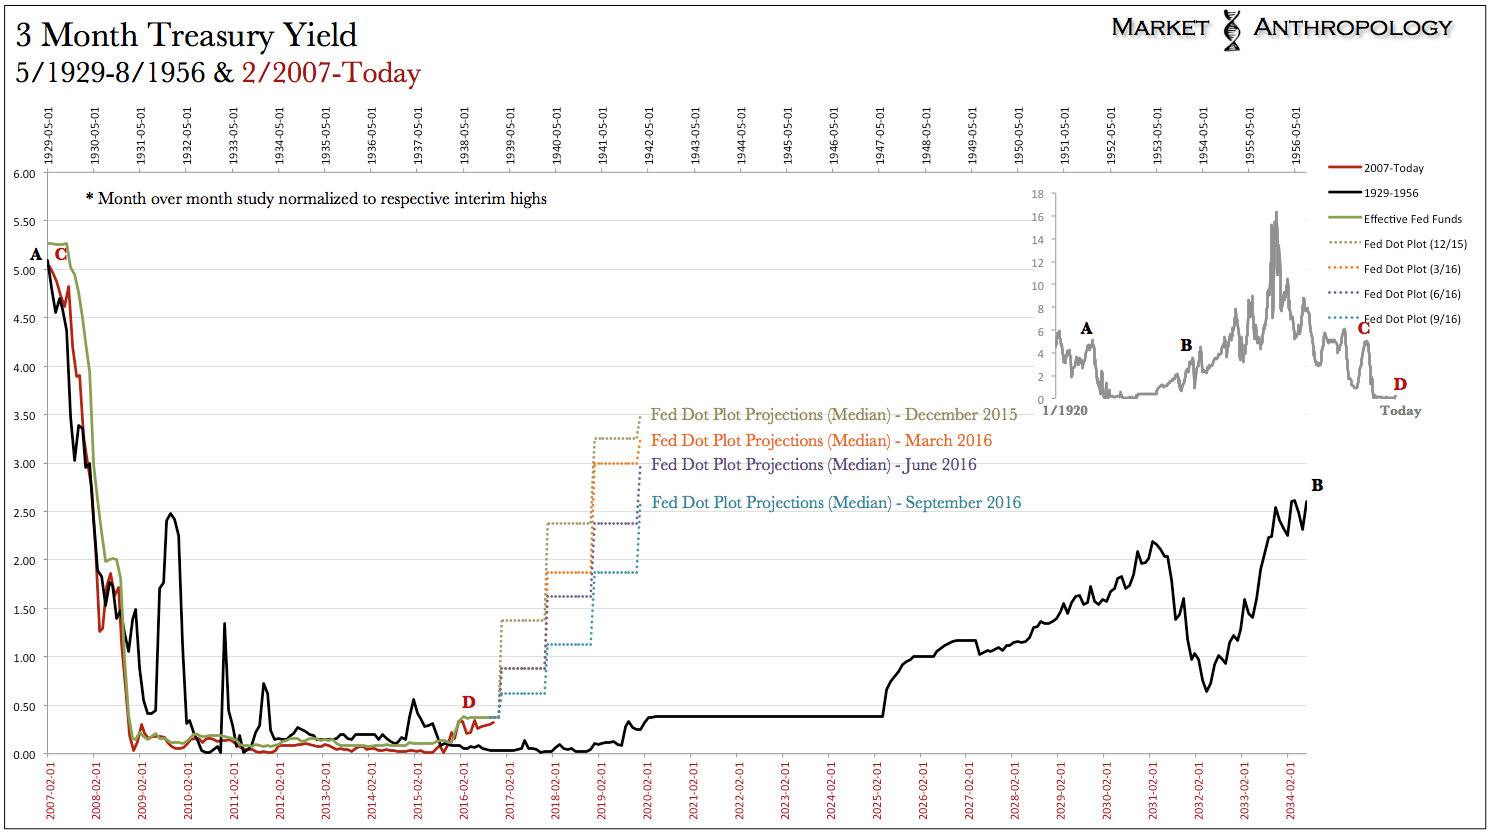 3 Month Treasury Yield 5/1929-8/1956 vs 2/2007-Today